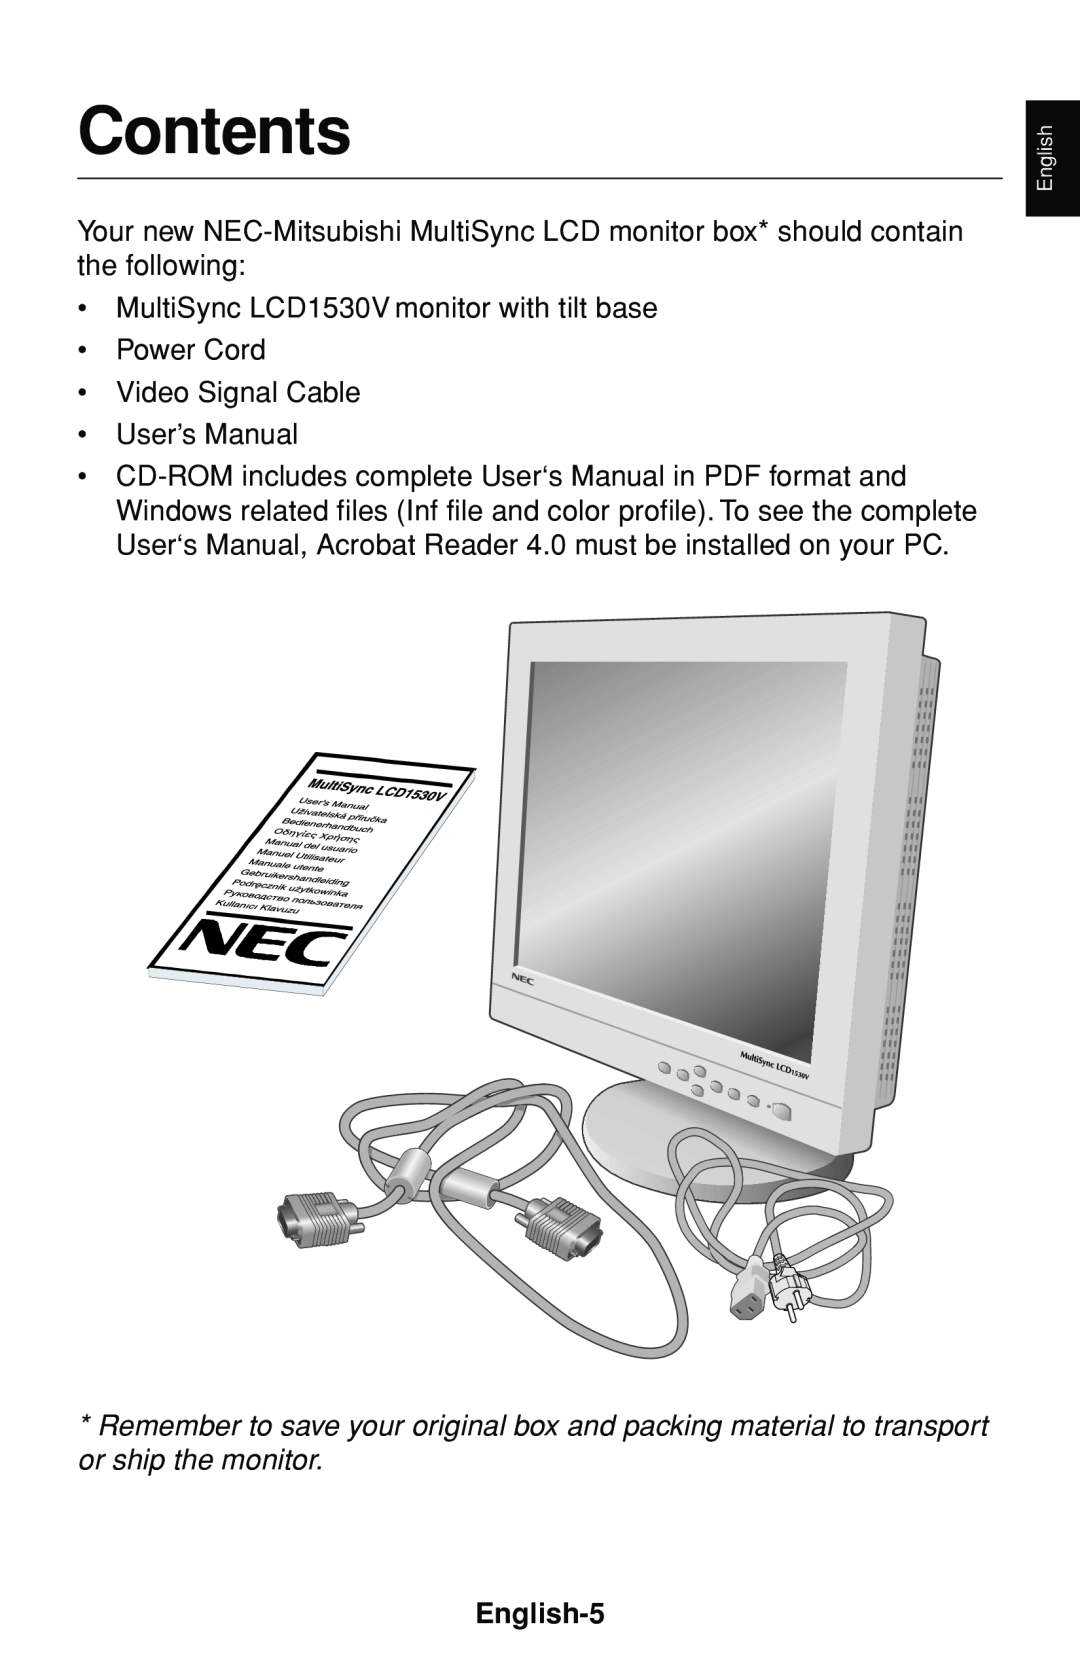 NEC LCD1530V user manual Contents, English-5 